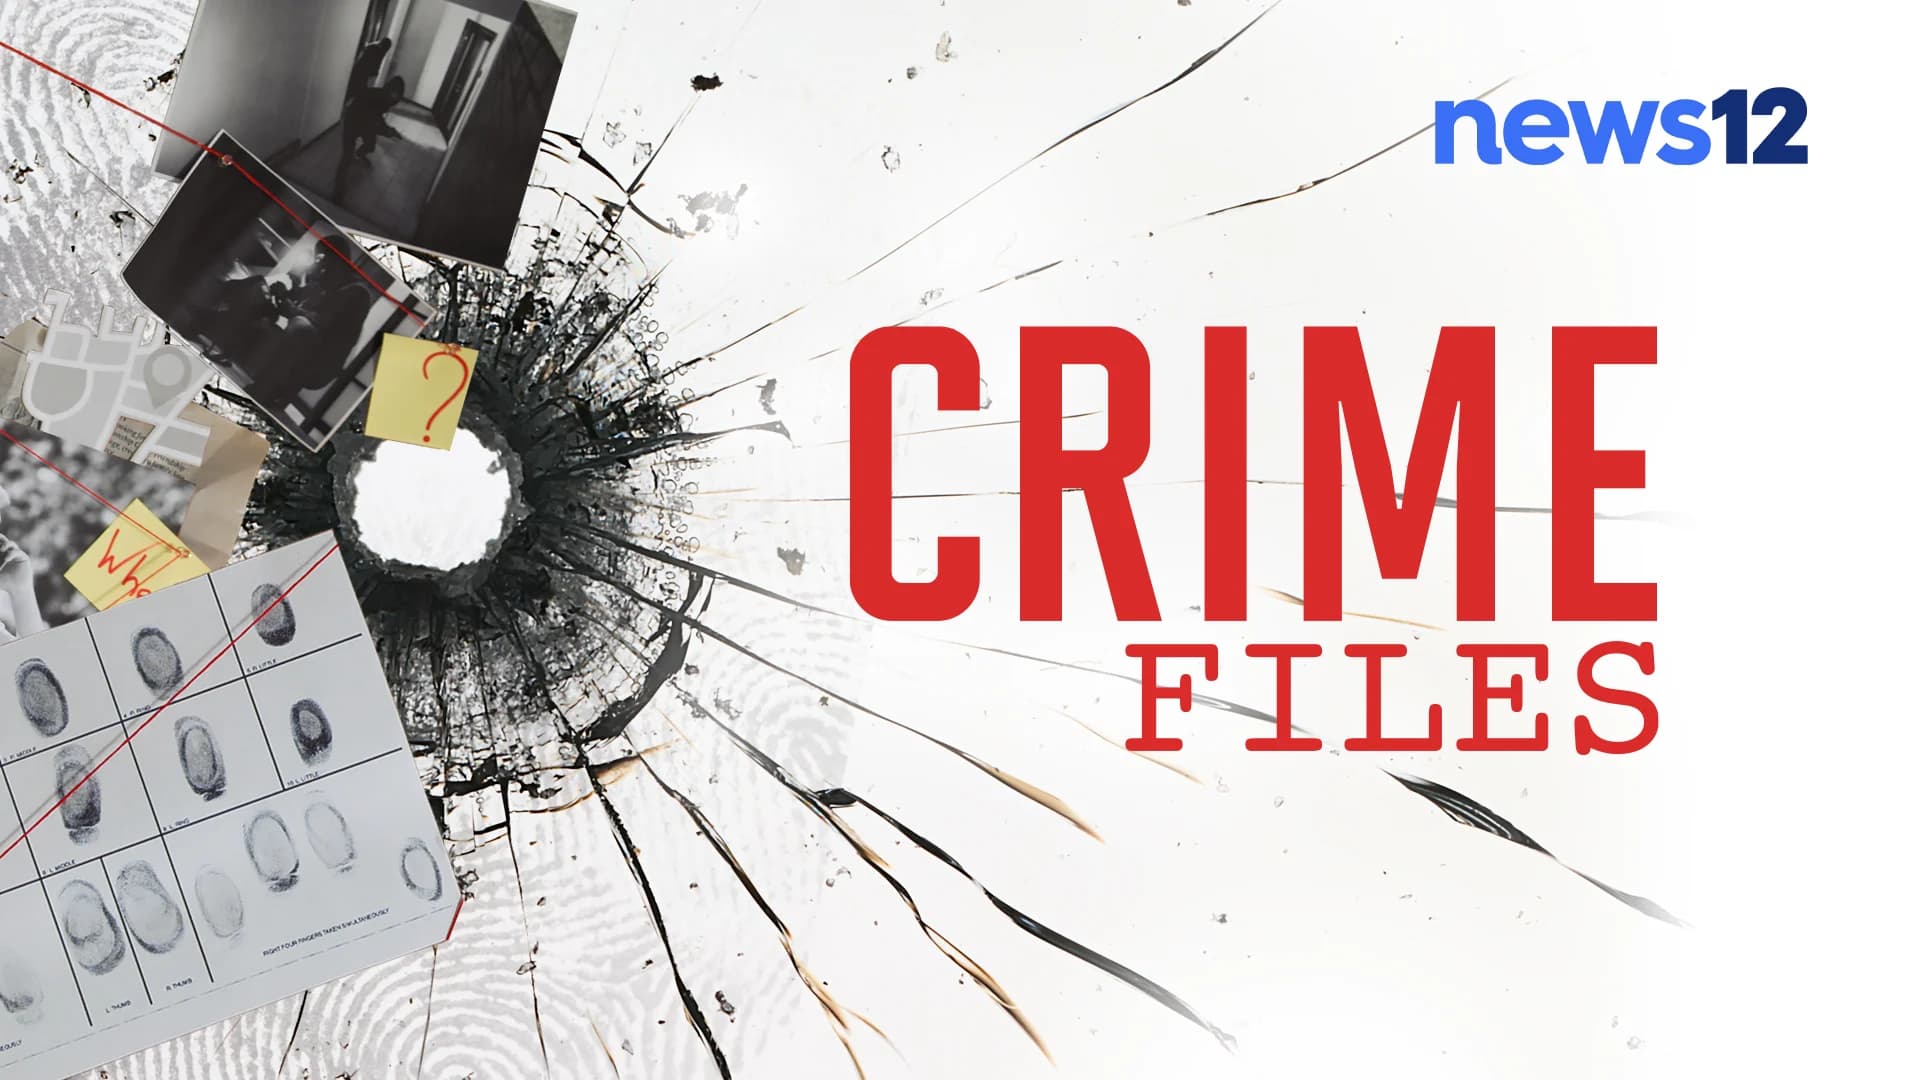 News 12’s CRIME FILES Returns for a Third Season